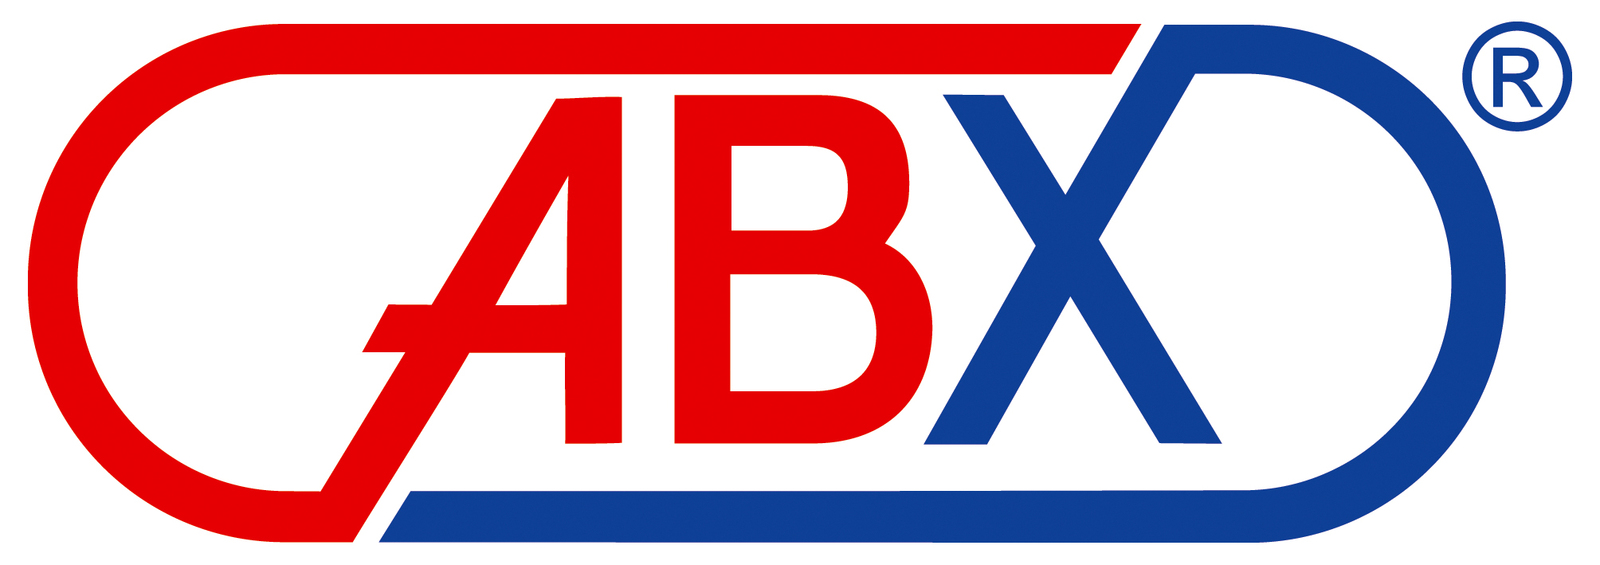 abx logo s R